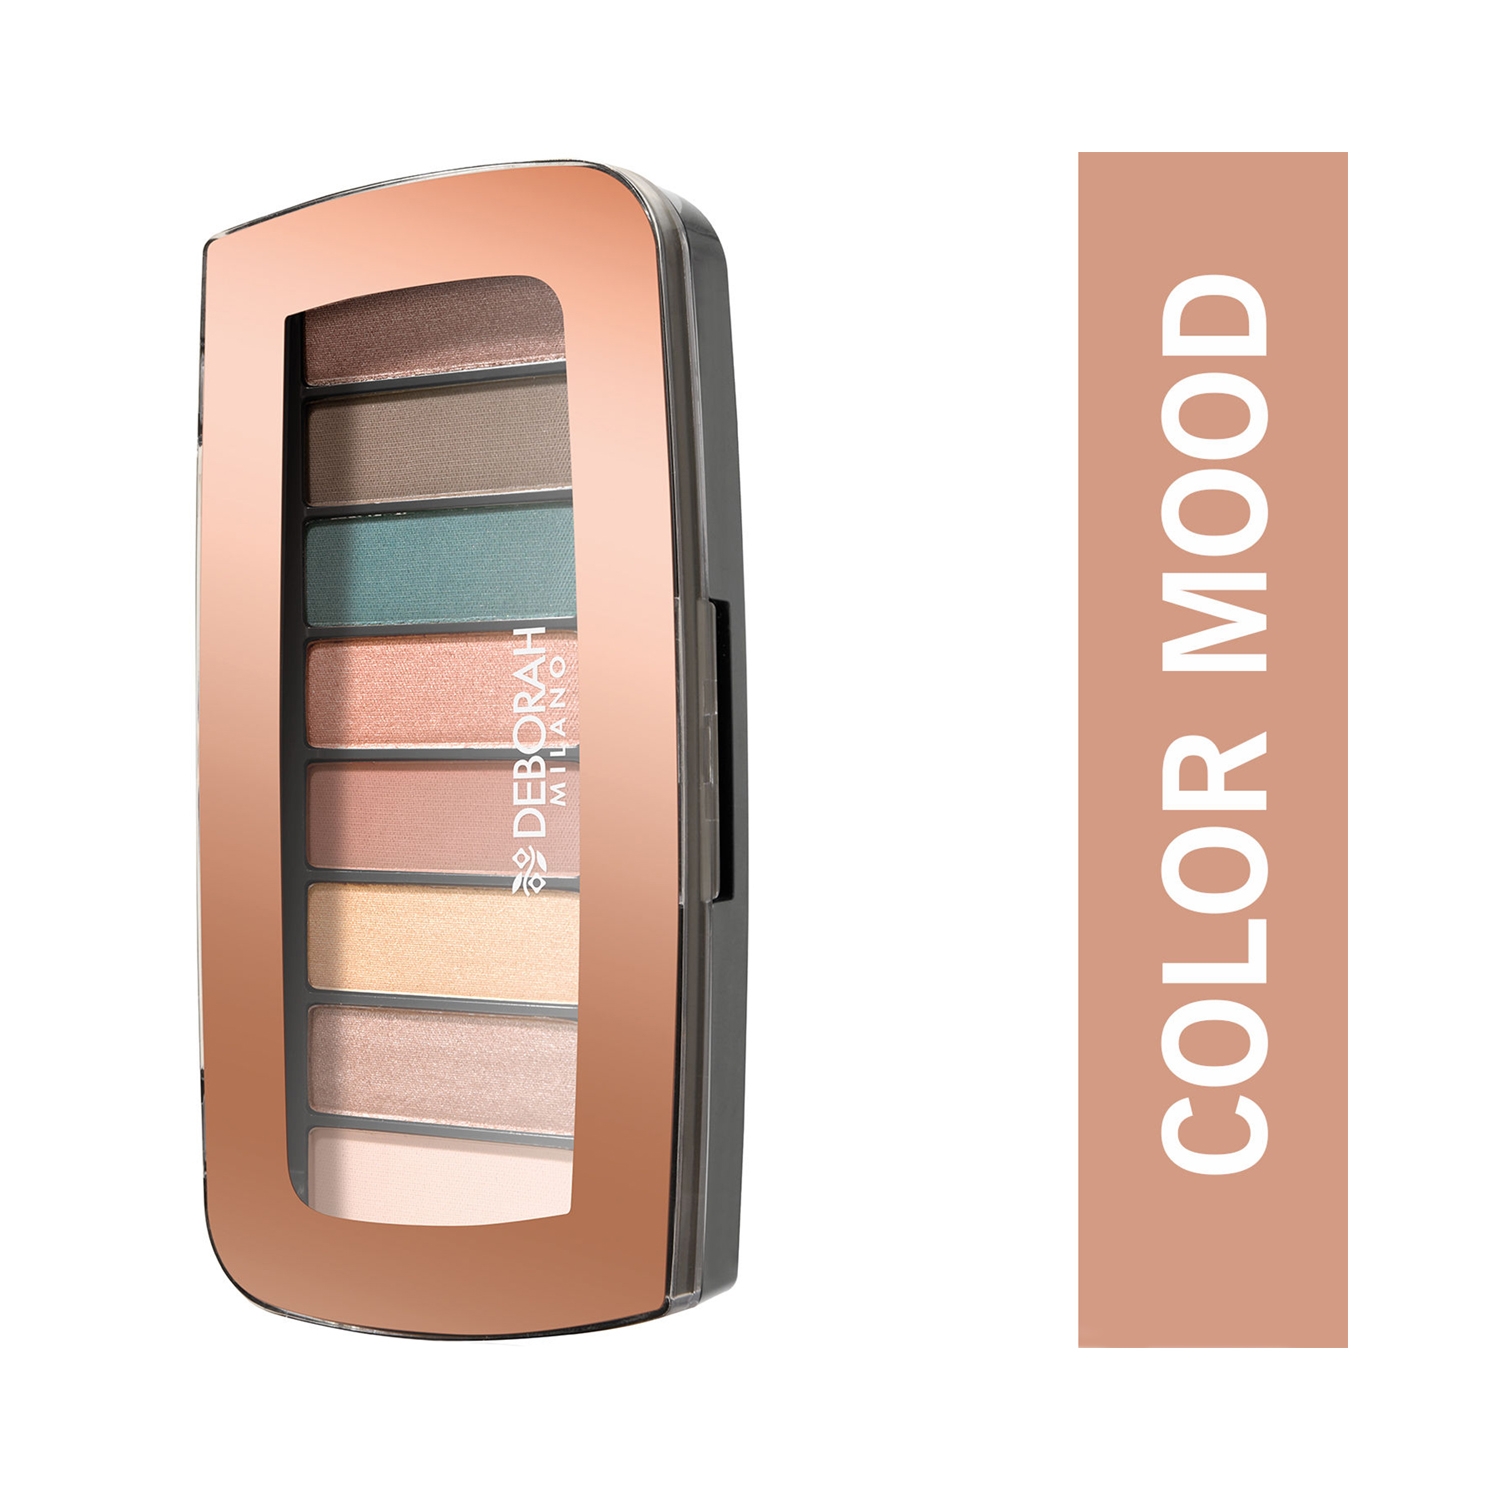 Deborah Milano Color Moods Eyeshadow Palette - 03 Sunset (8g)